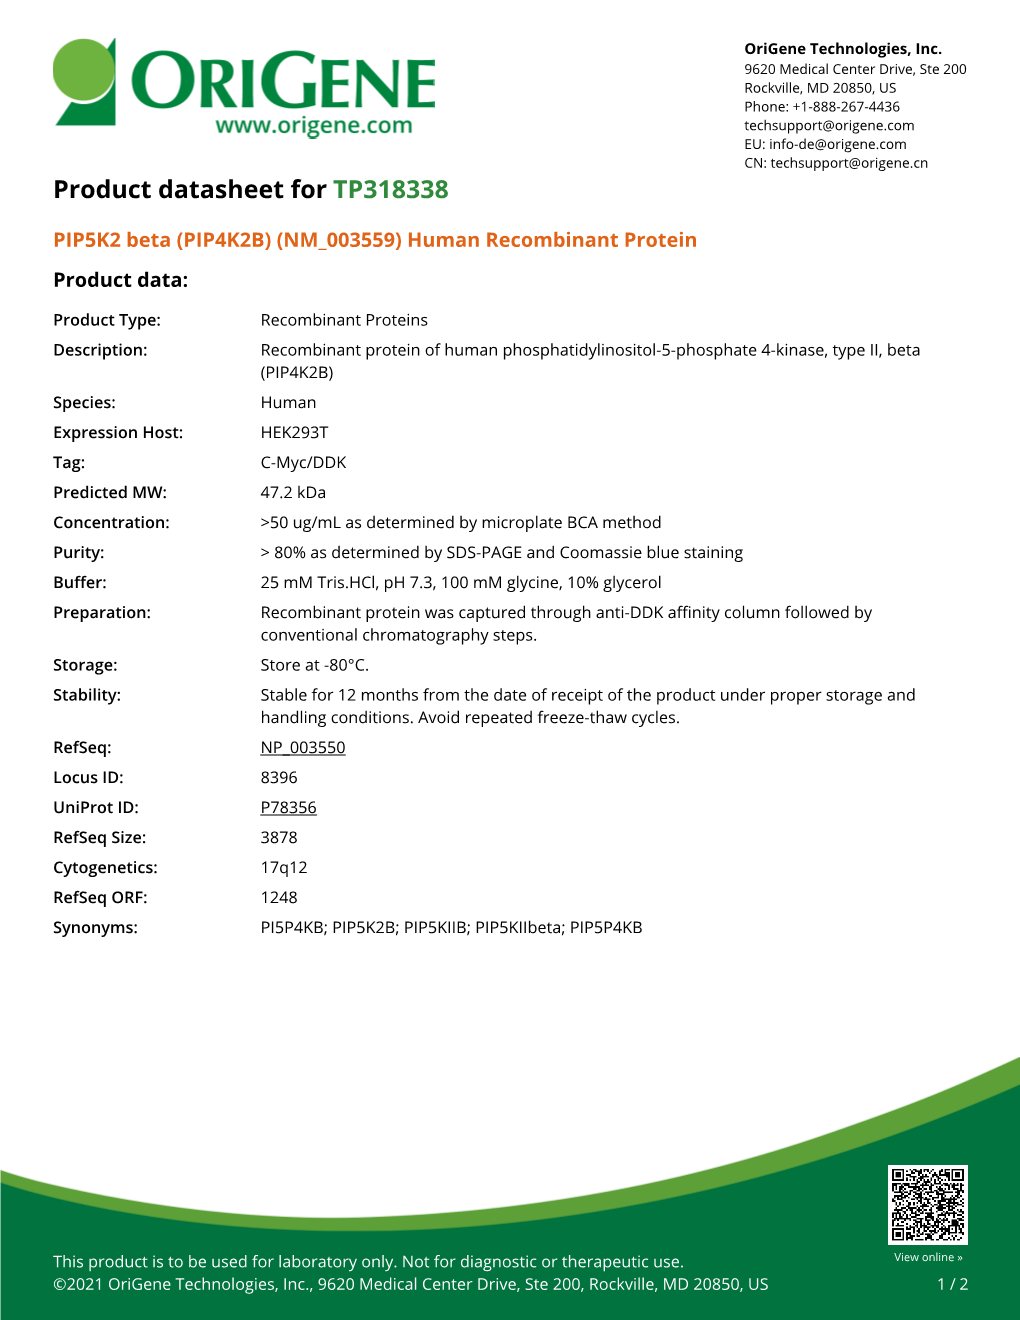 PIP5K2 Beta (PIP4K2B) (NM 003559) Human Recombinant Protein Product Data